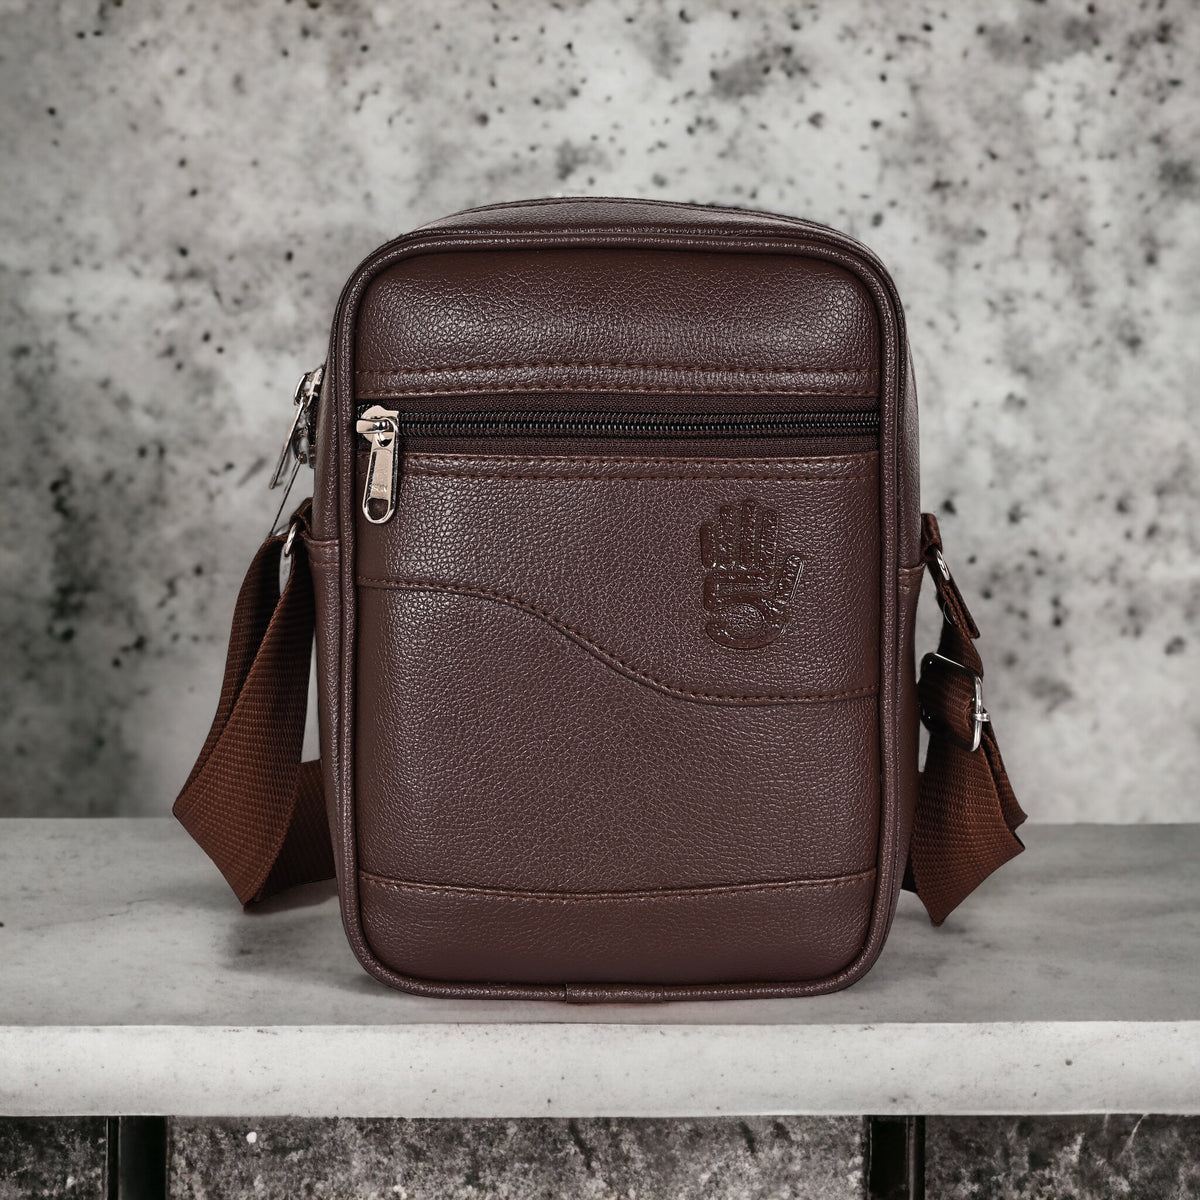 Pramadda Pure Luxury Stylish Square Crossbody Leather Sling Bag For Men  Women Travel, Mobile Chest Small Mini Side Bag